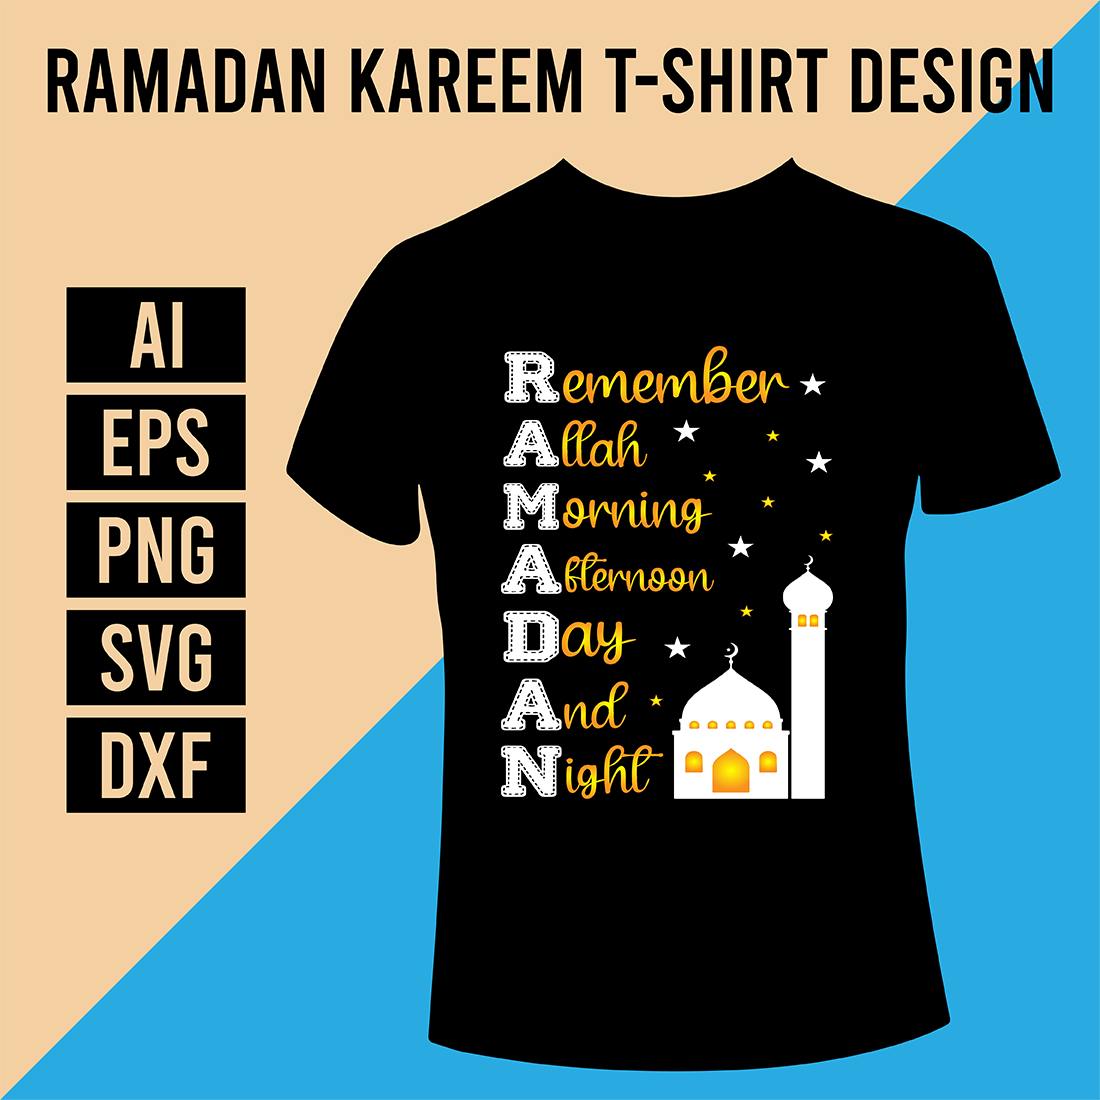 Ramadan Kareem T-Shirt Design cover image.